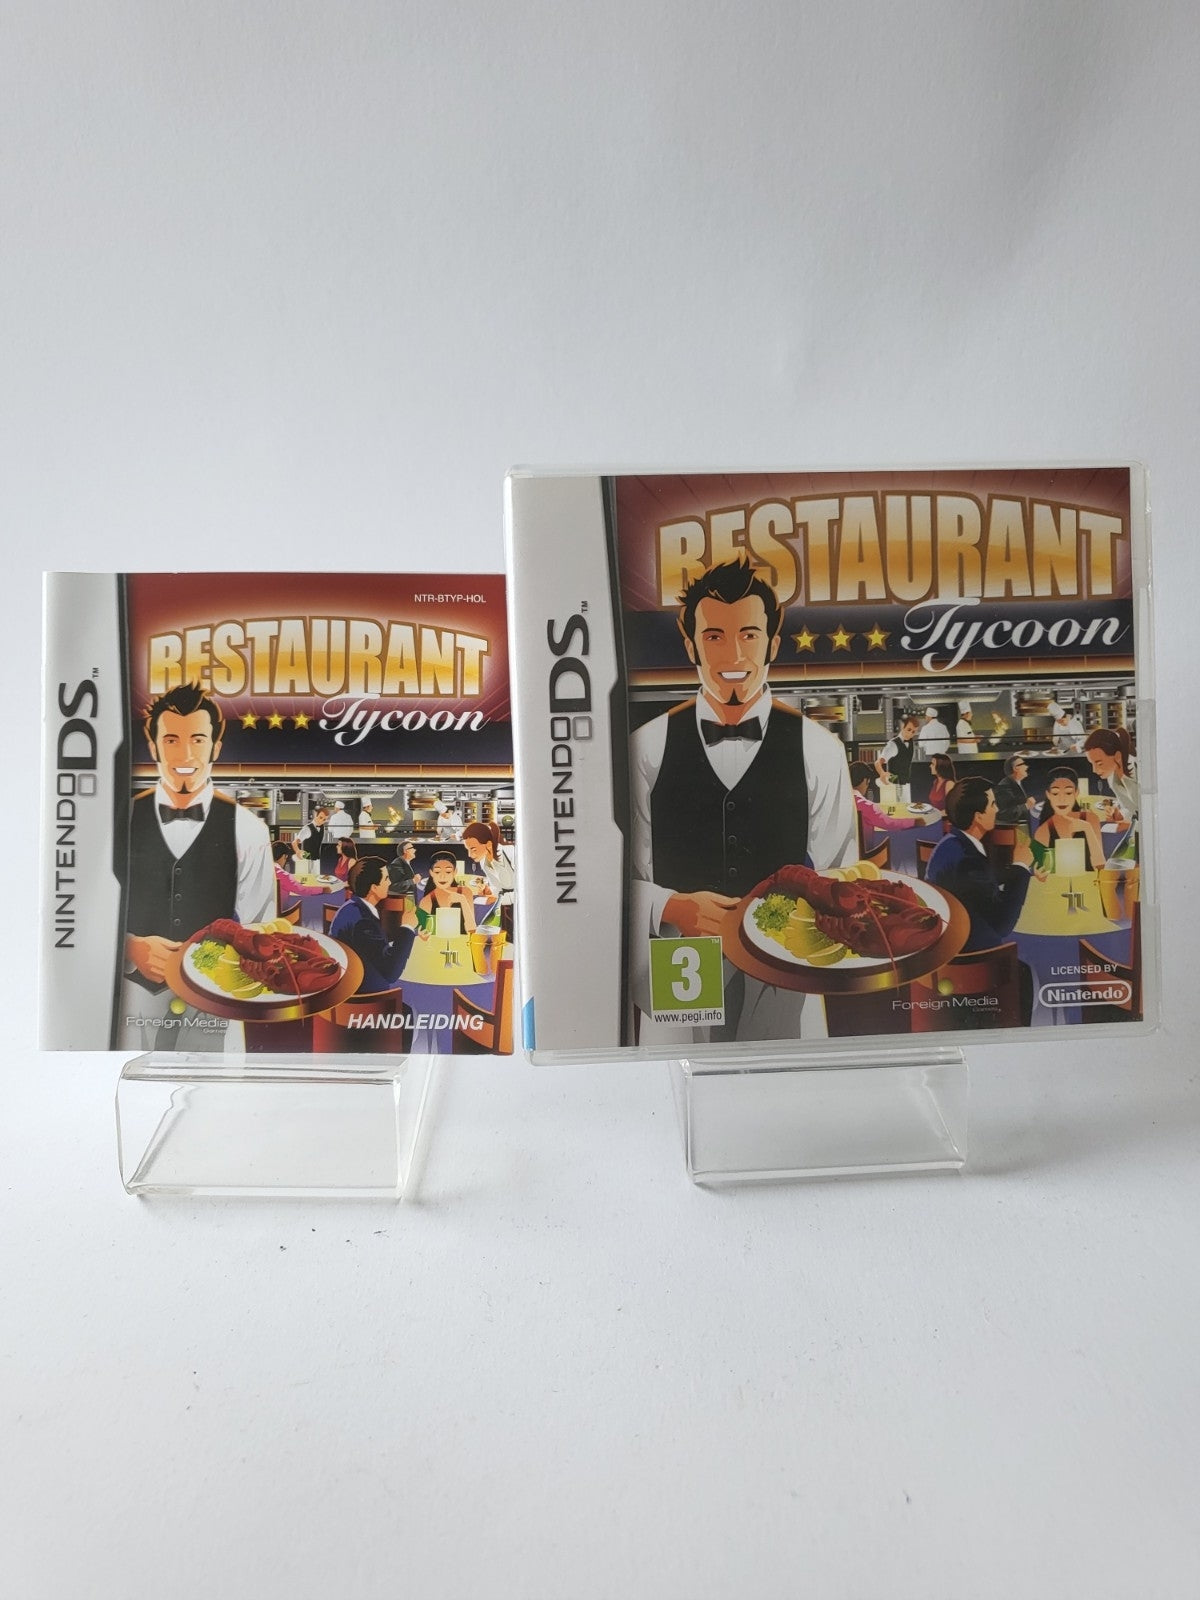 Restaurant Tycoon Nintendo DS